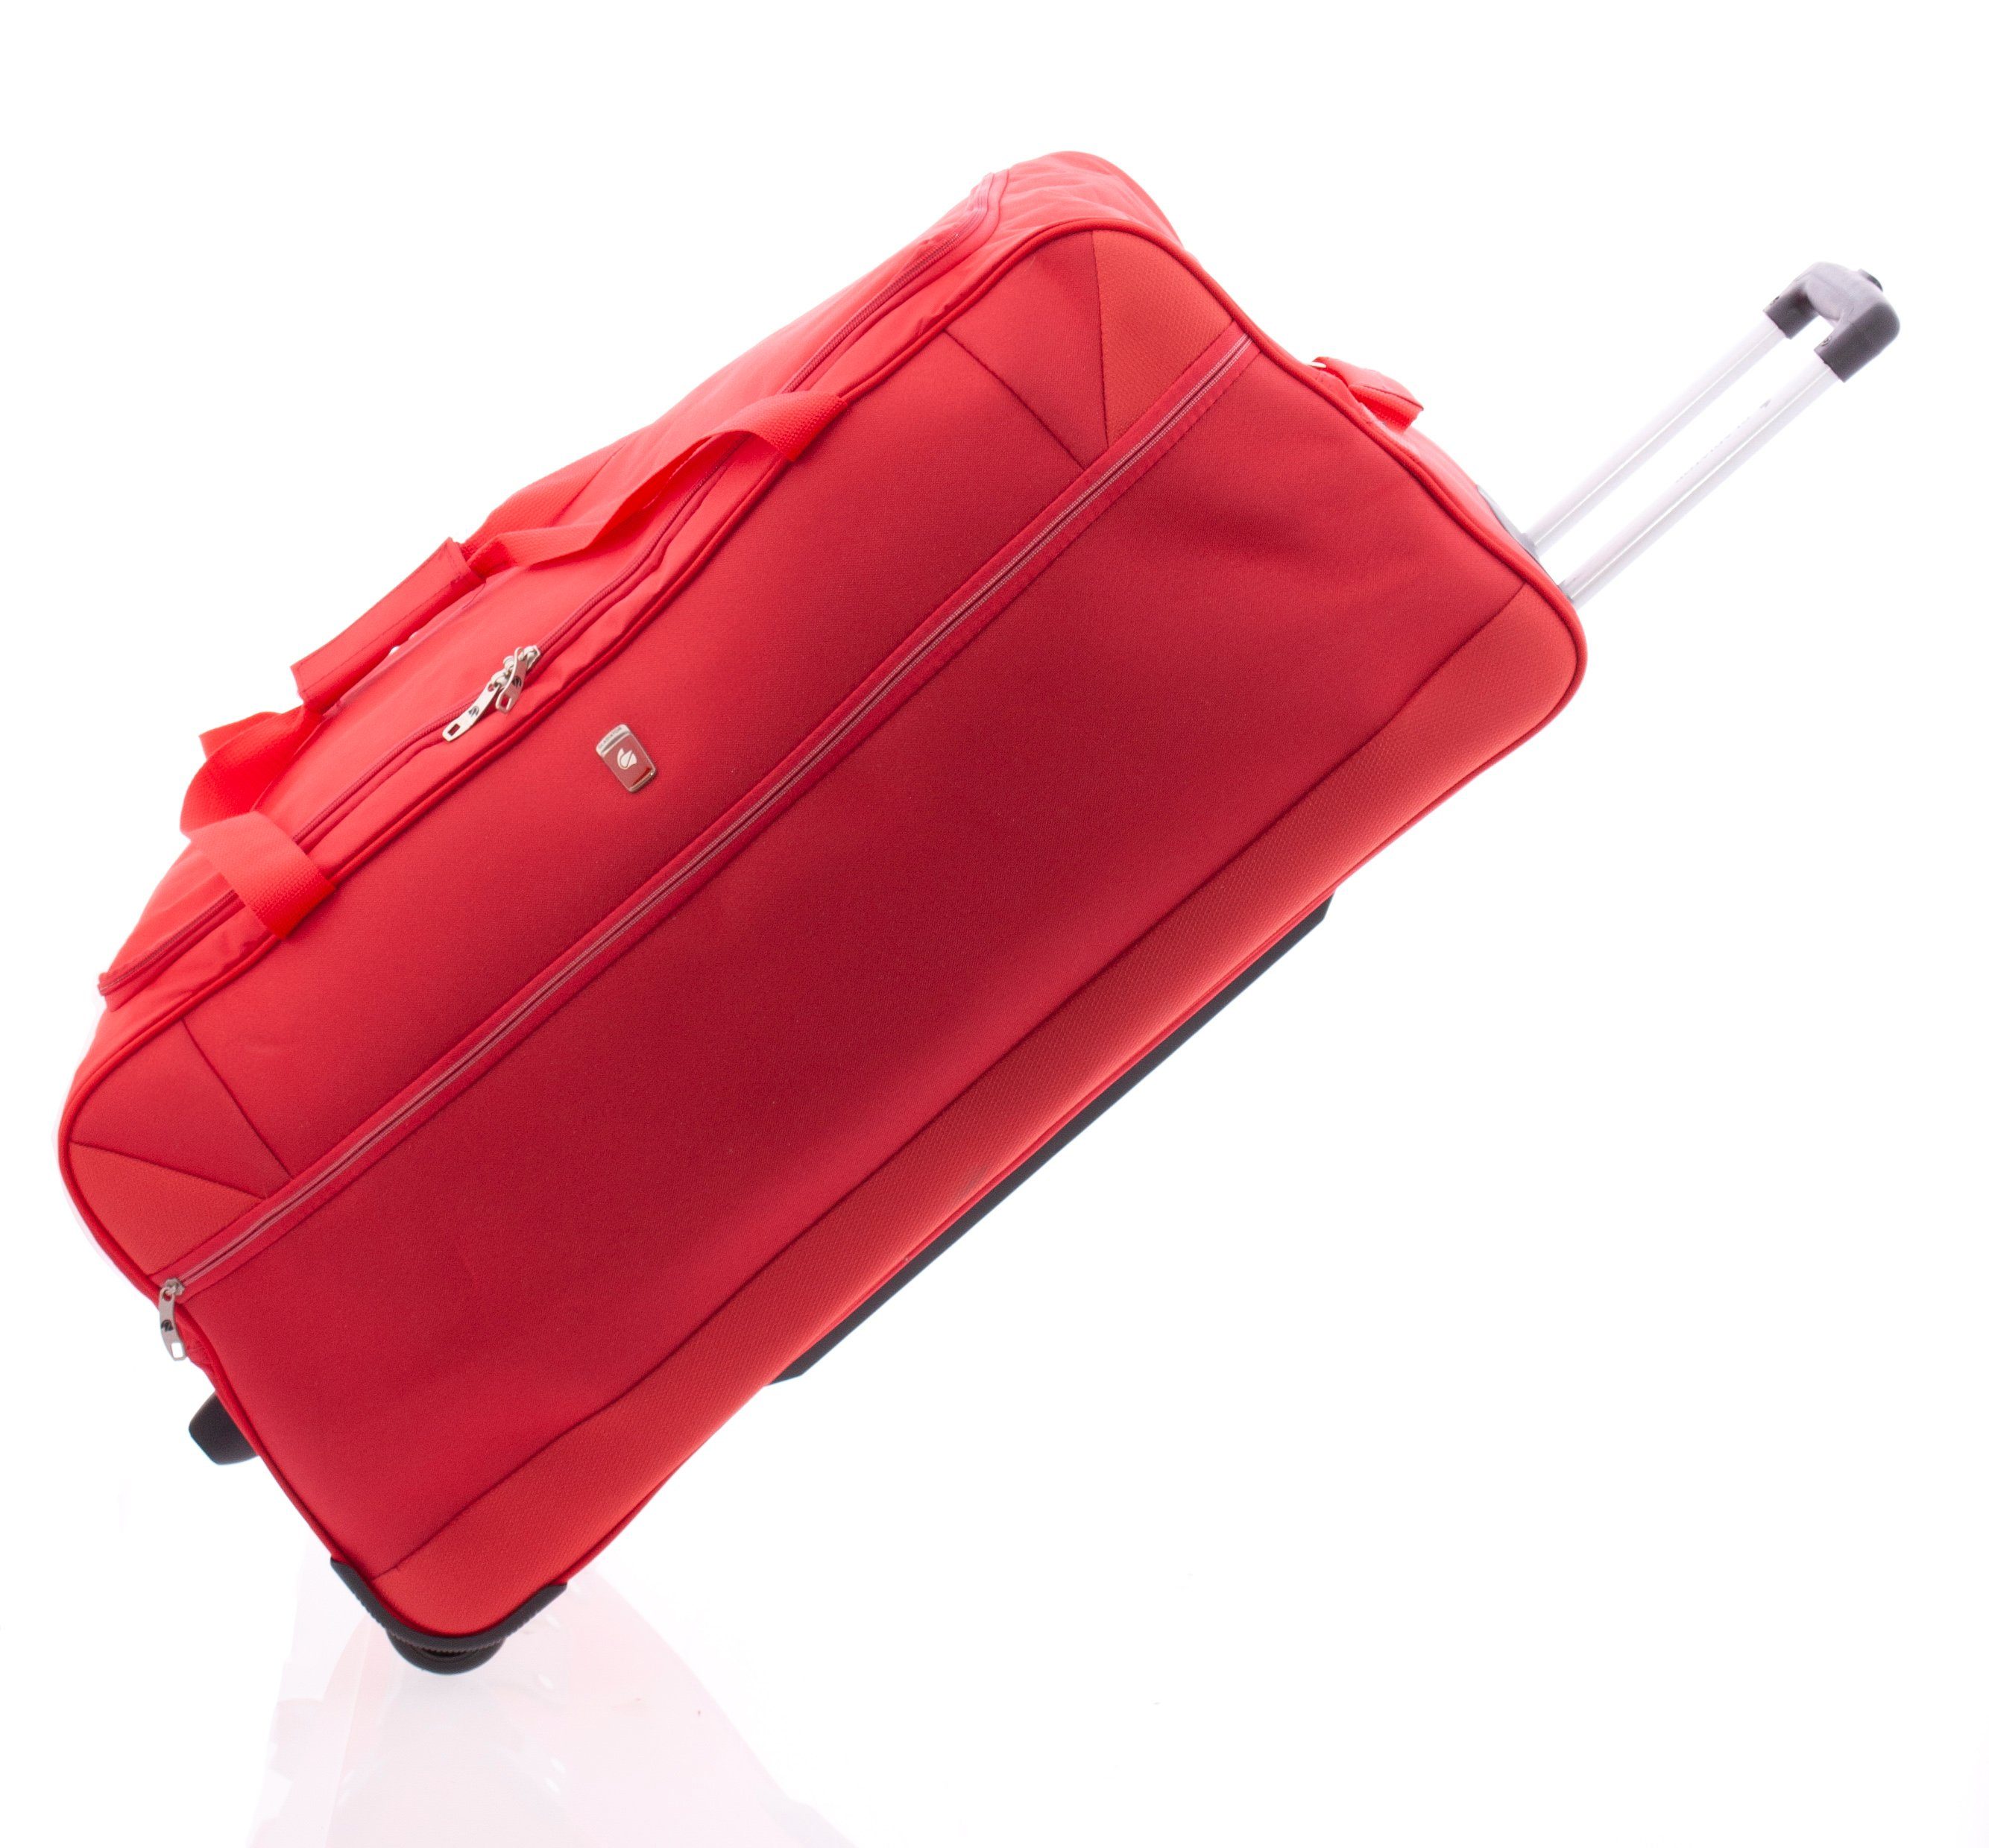 GLADIATOR Reisetasche mit Rollen - JUMBO - 80 cm - 104 Liter - Rollentasche, Trolleytasche, Gewicht: 2,8 kg, Trolley-Reisetasche Sporttasche - rot | Reisetaschen